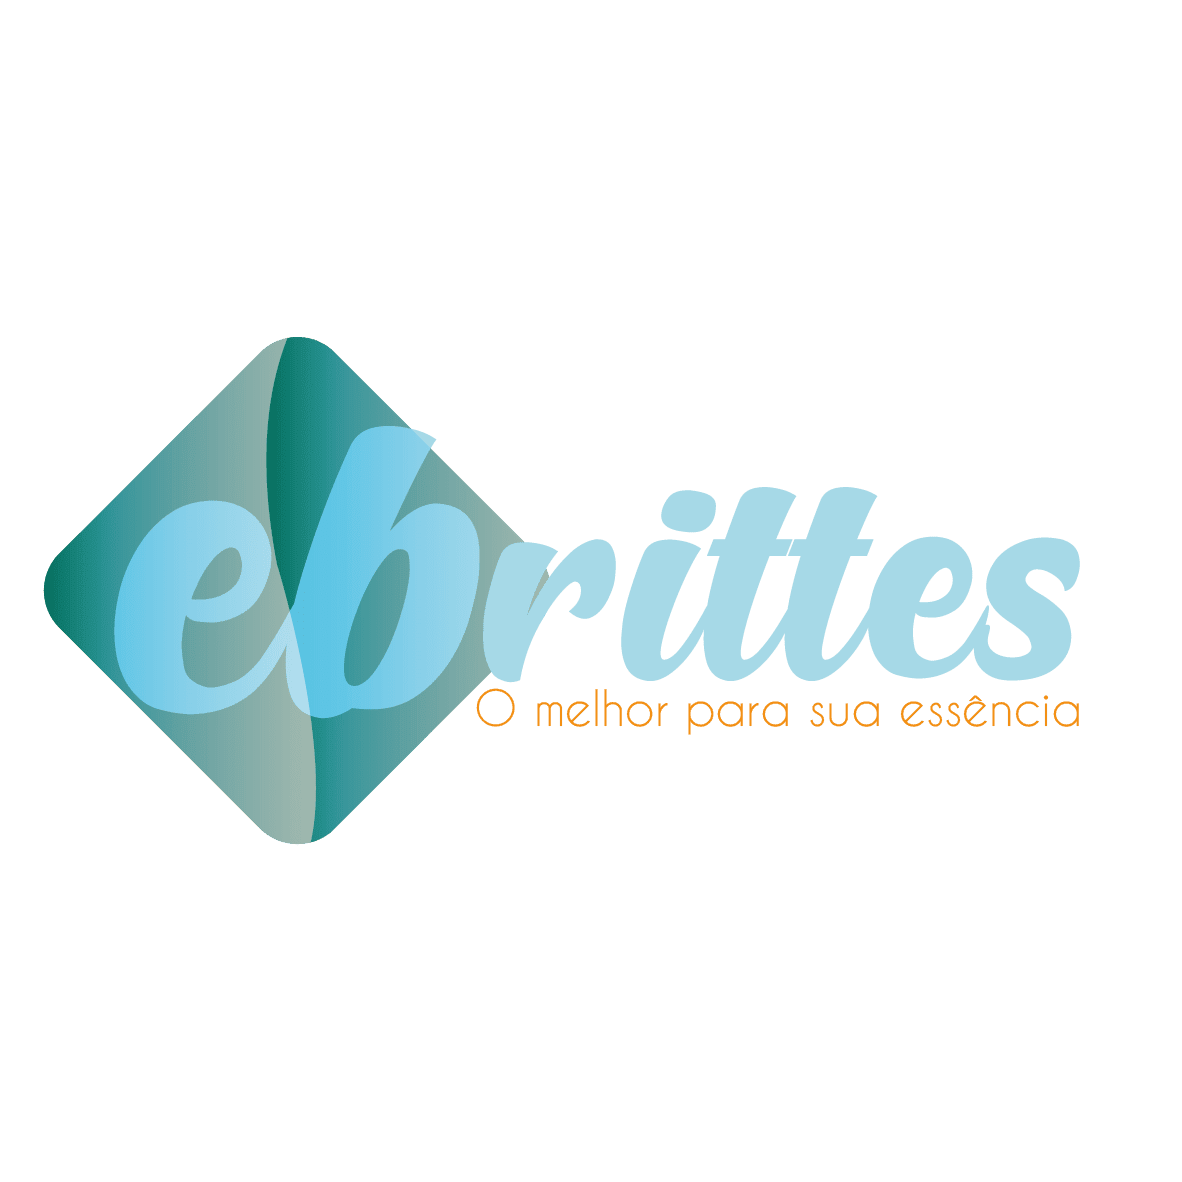 EBrittes